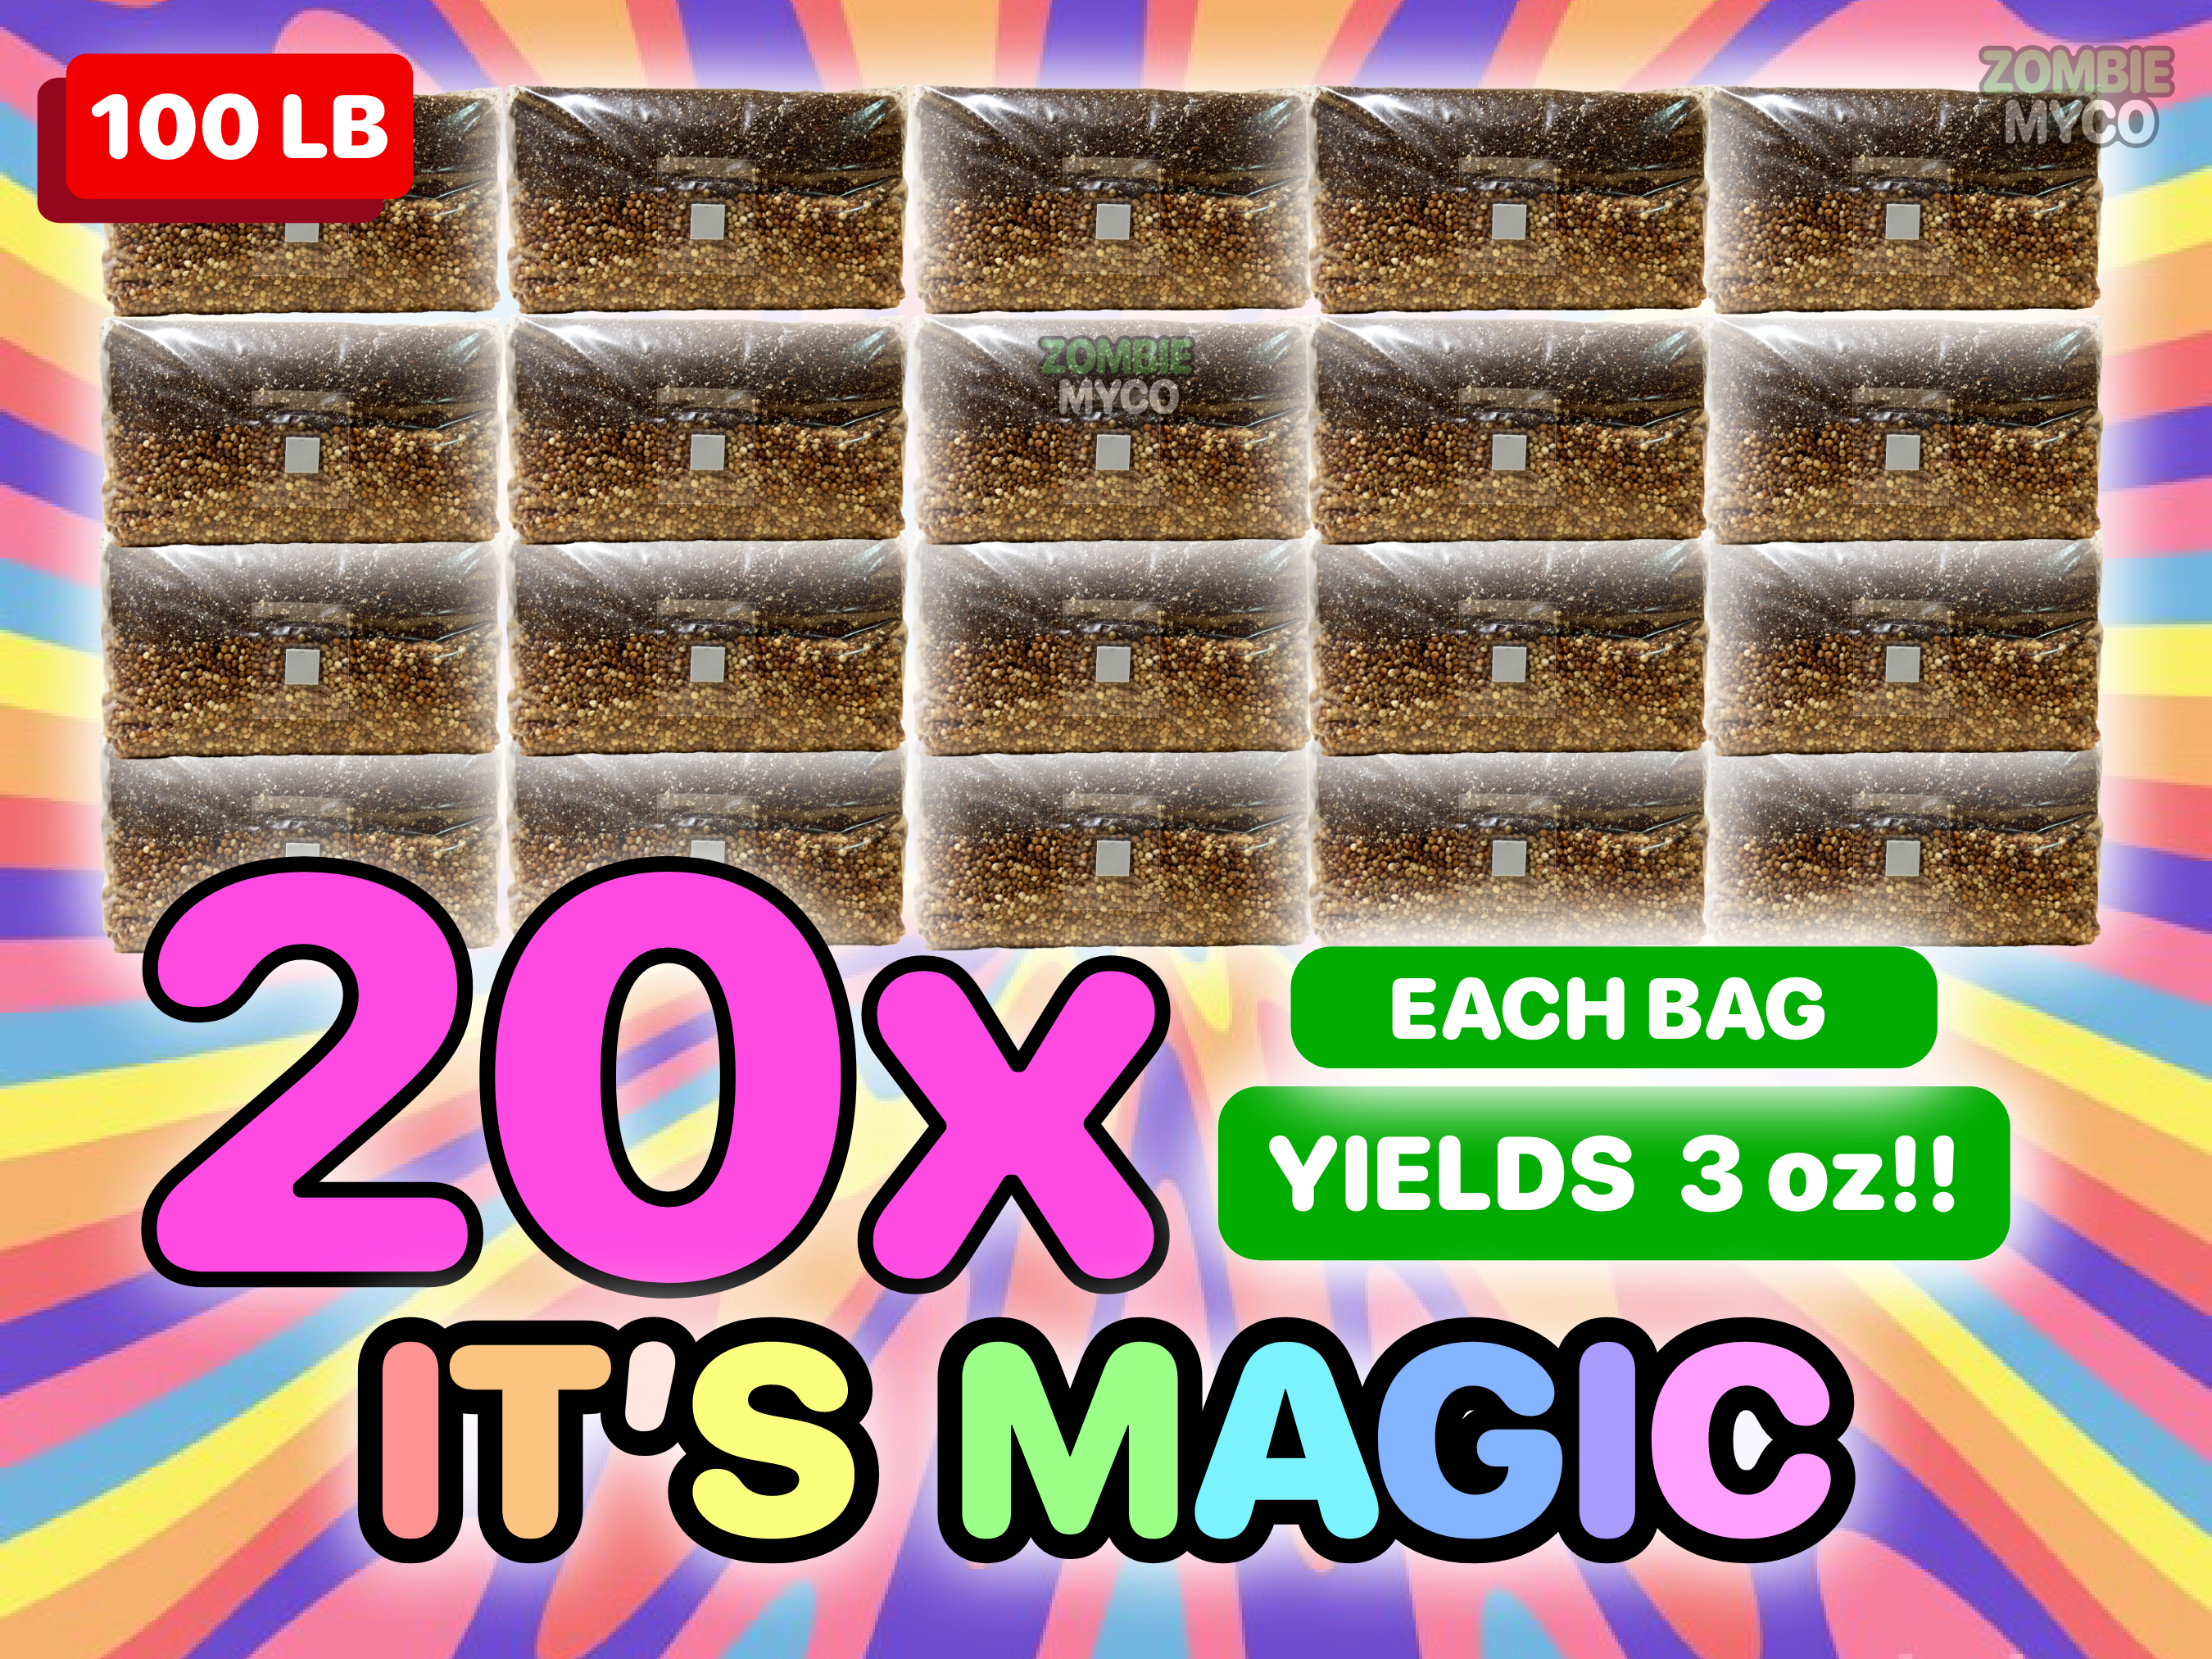 20X MUSHROOM GROW BAG (100LB) - EACH BAG YIELDS 3OZ